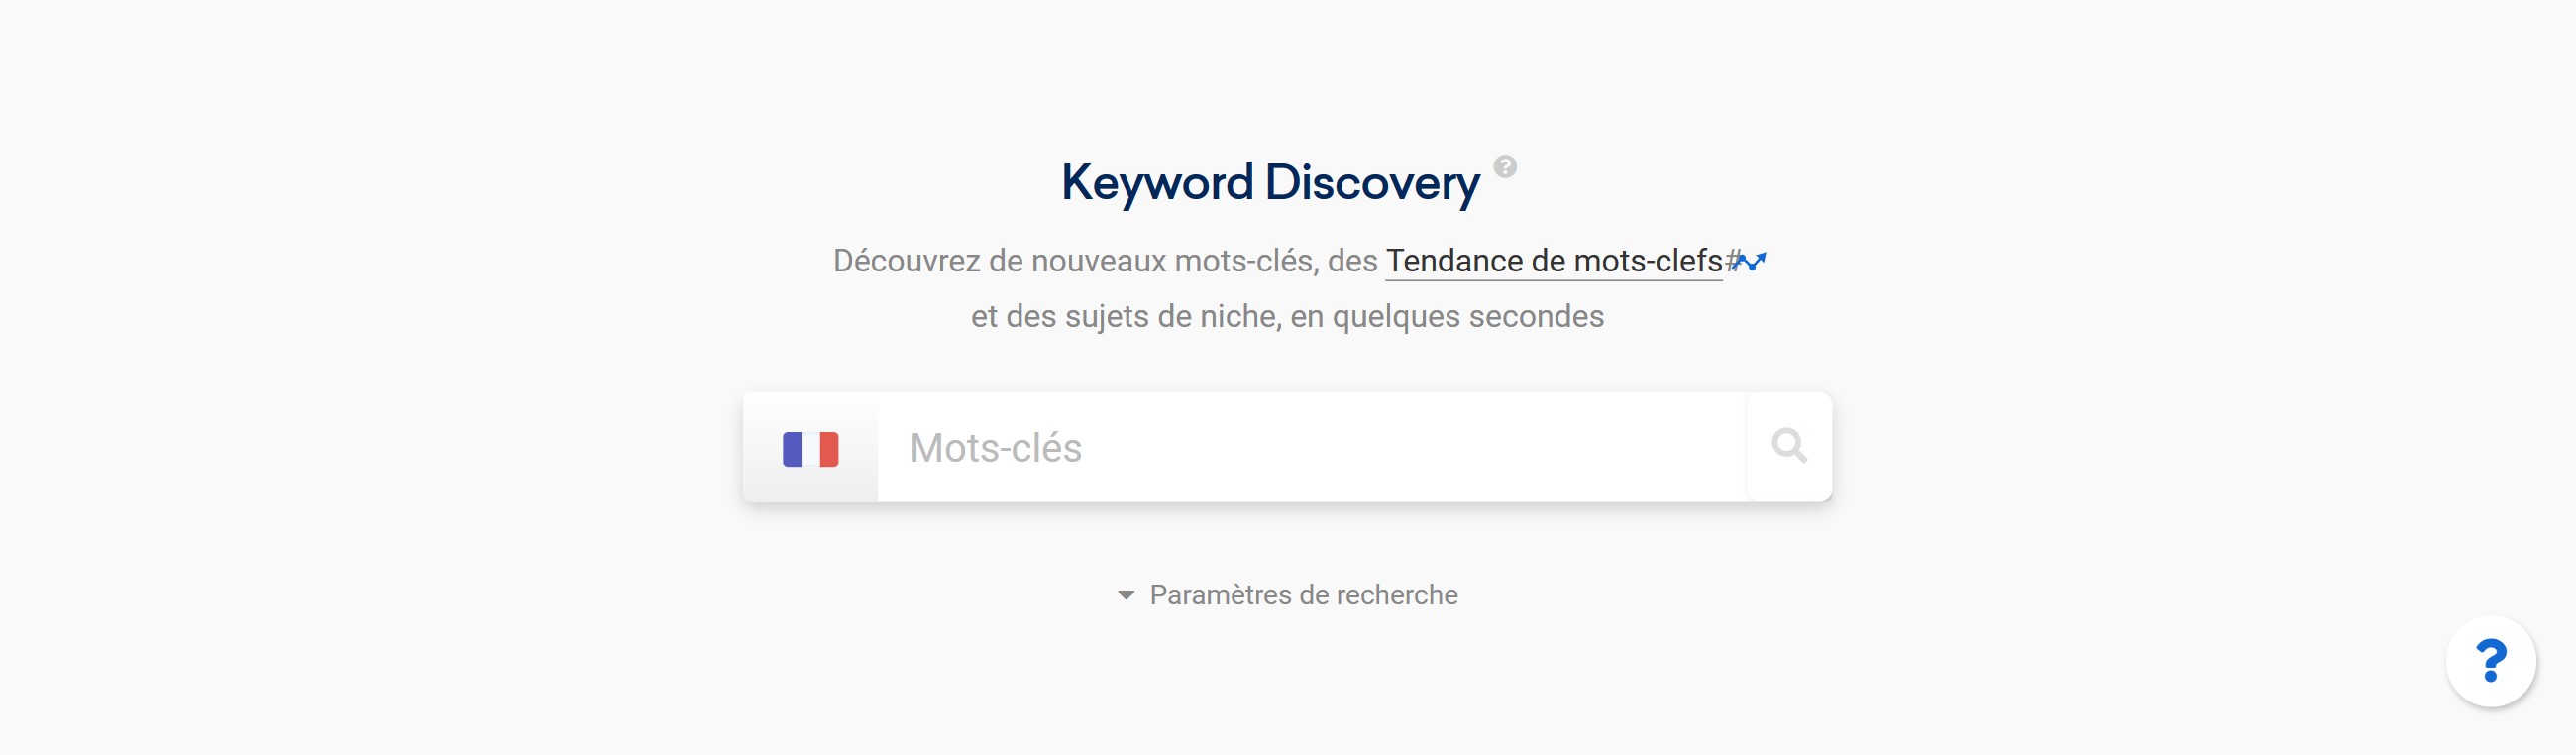 Outil Keyword Discovery dans l'explorateur de Mots-clés de la Toolbox SISTRIX